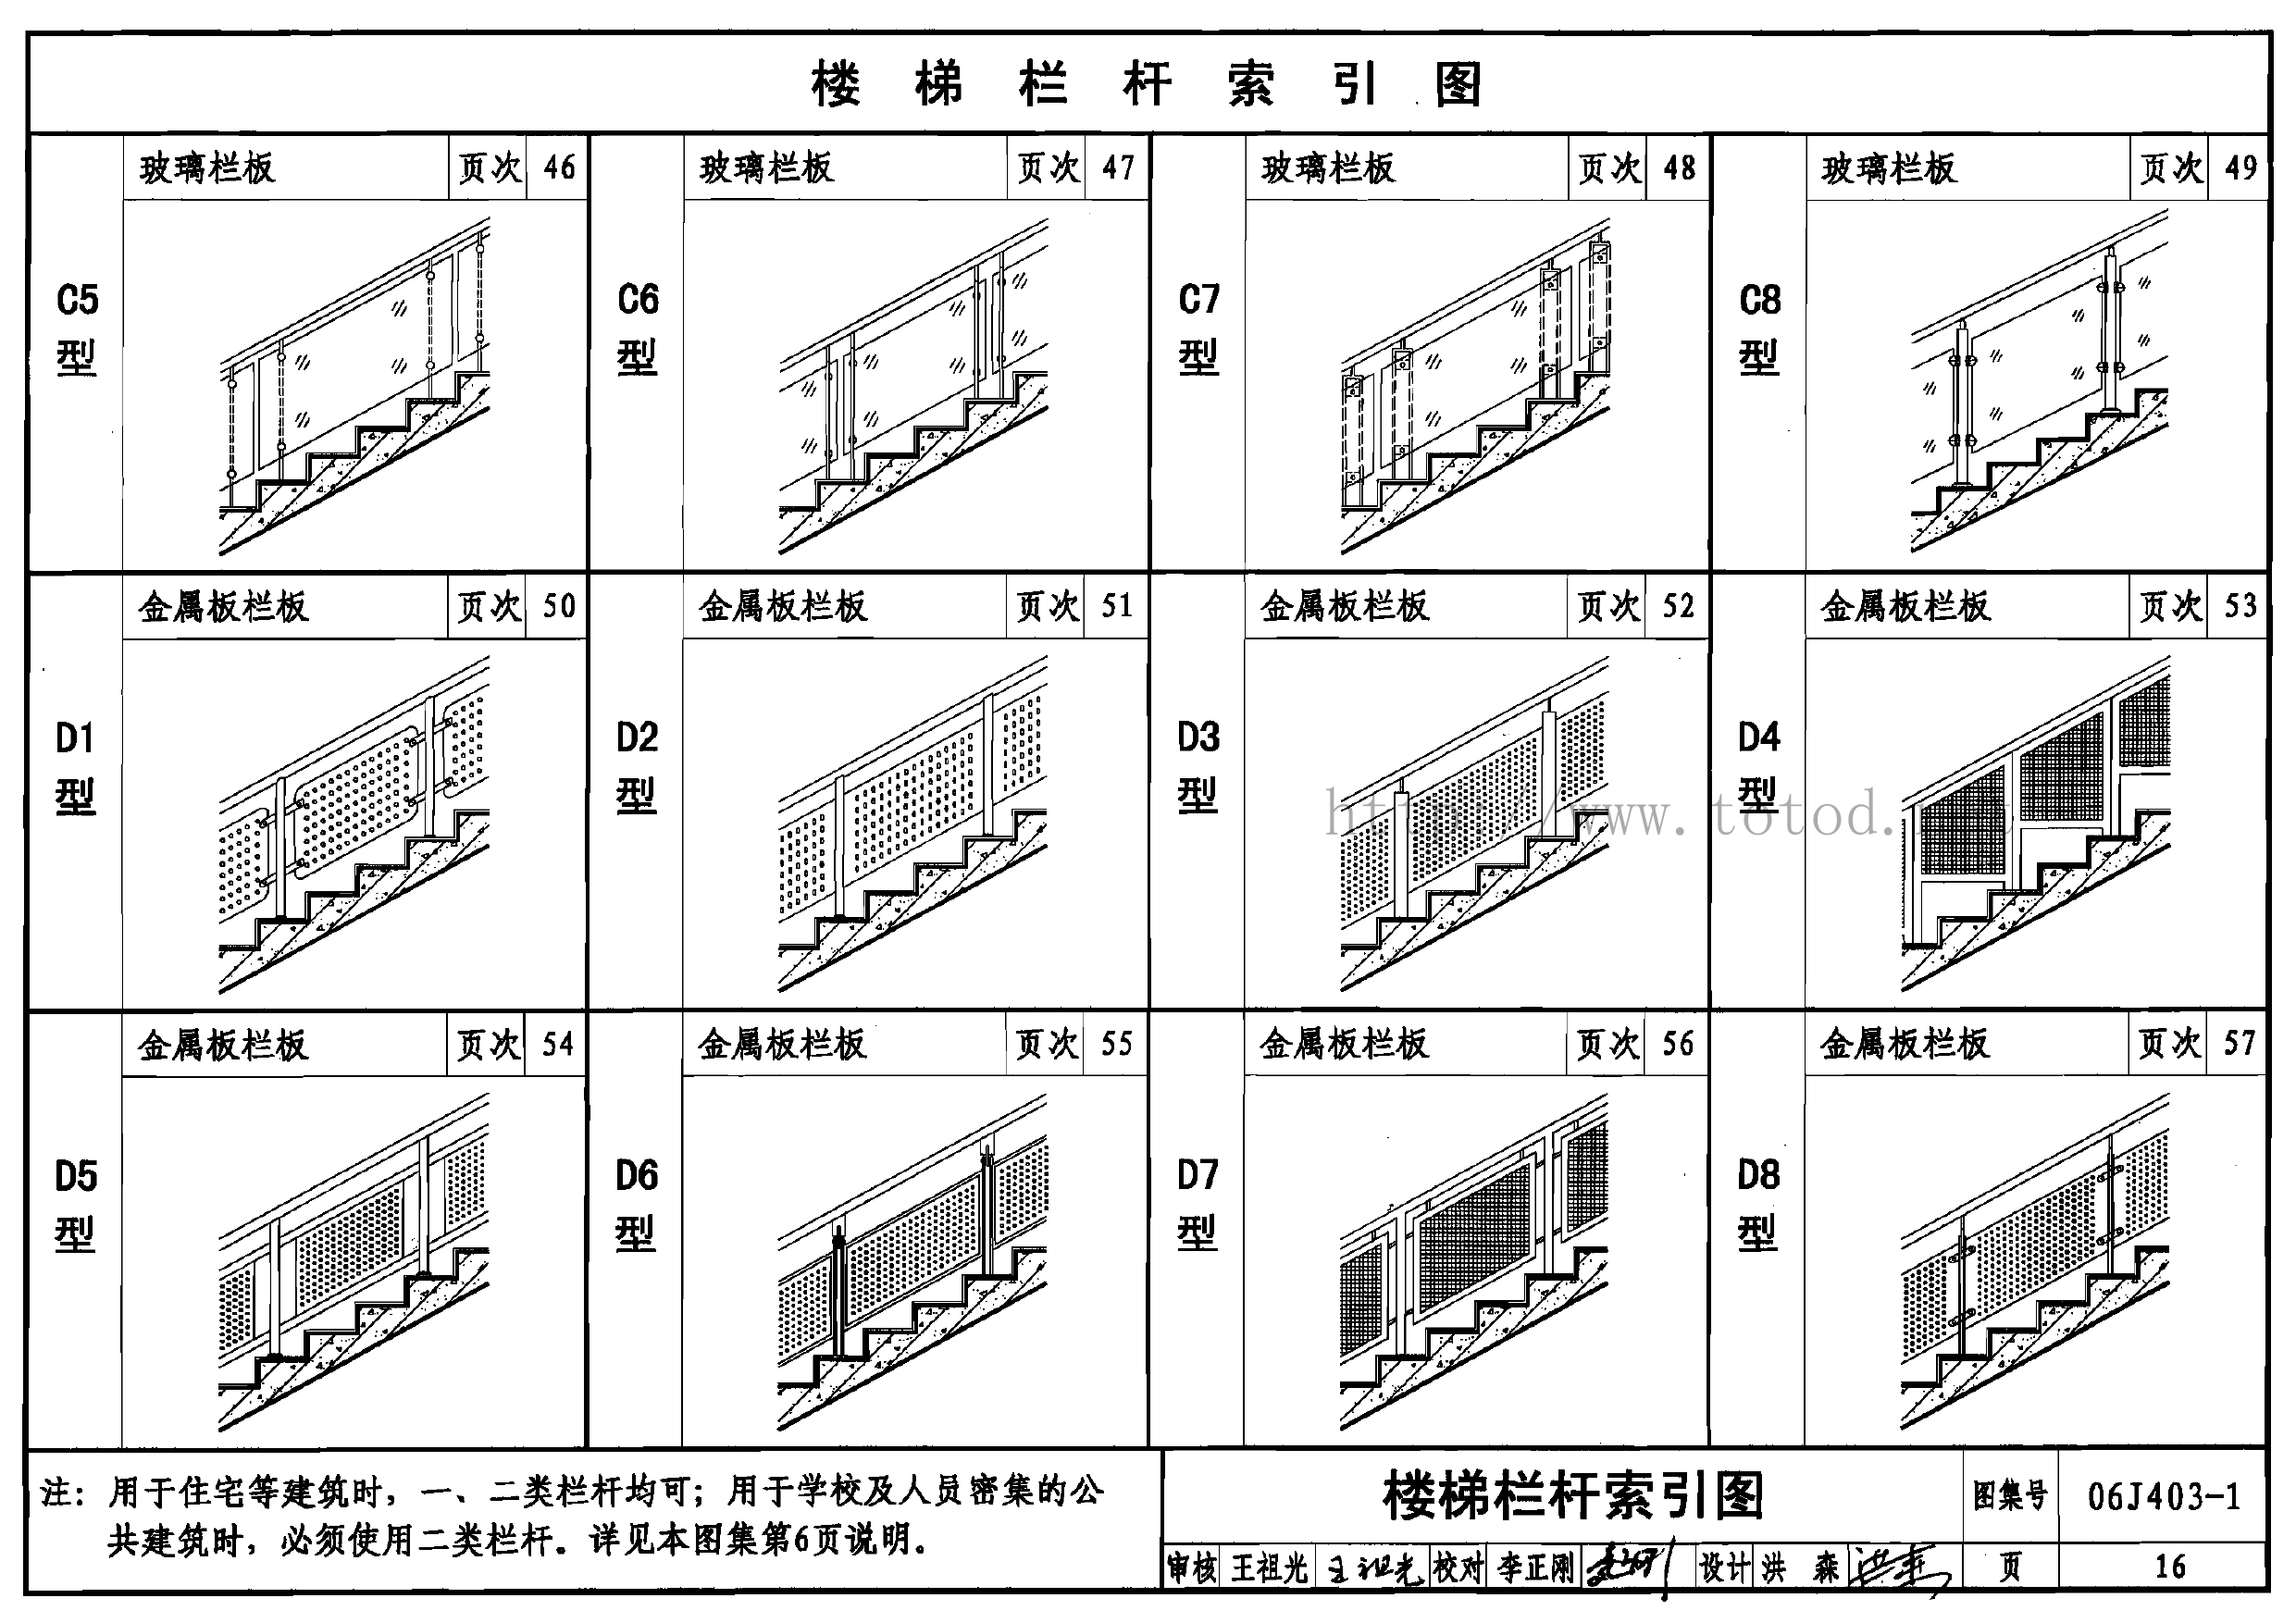 06J403-1：楼梯 栏杆 栏板（一） - 国家建筑标准设计网